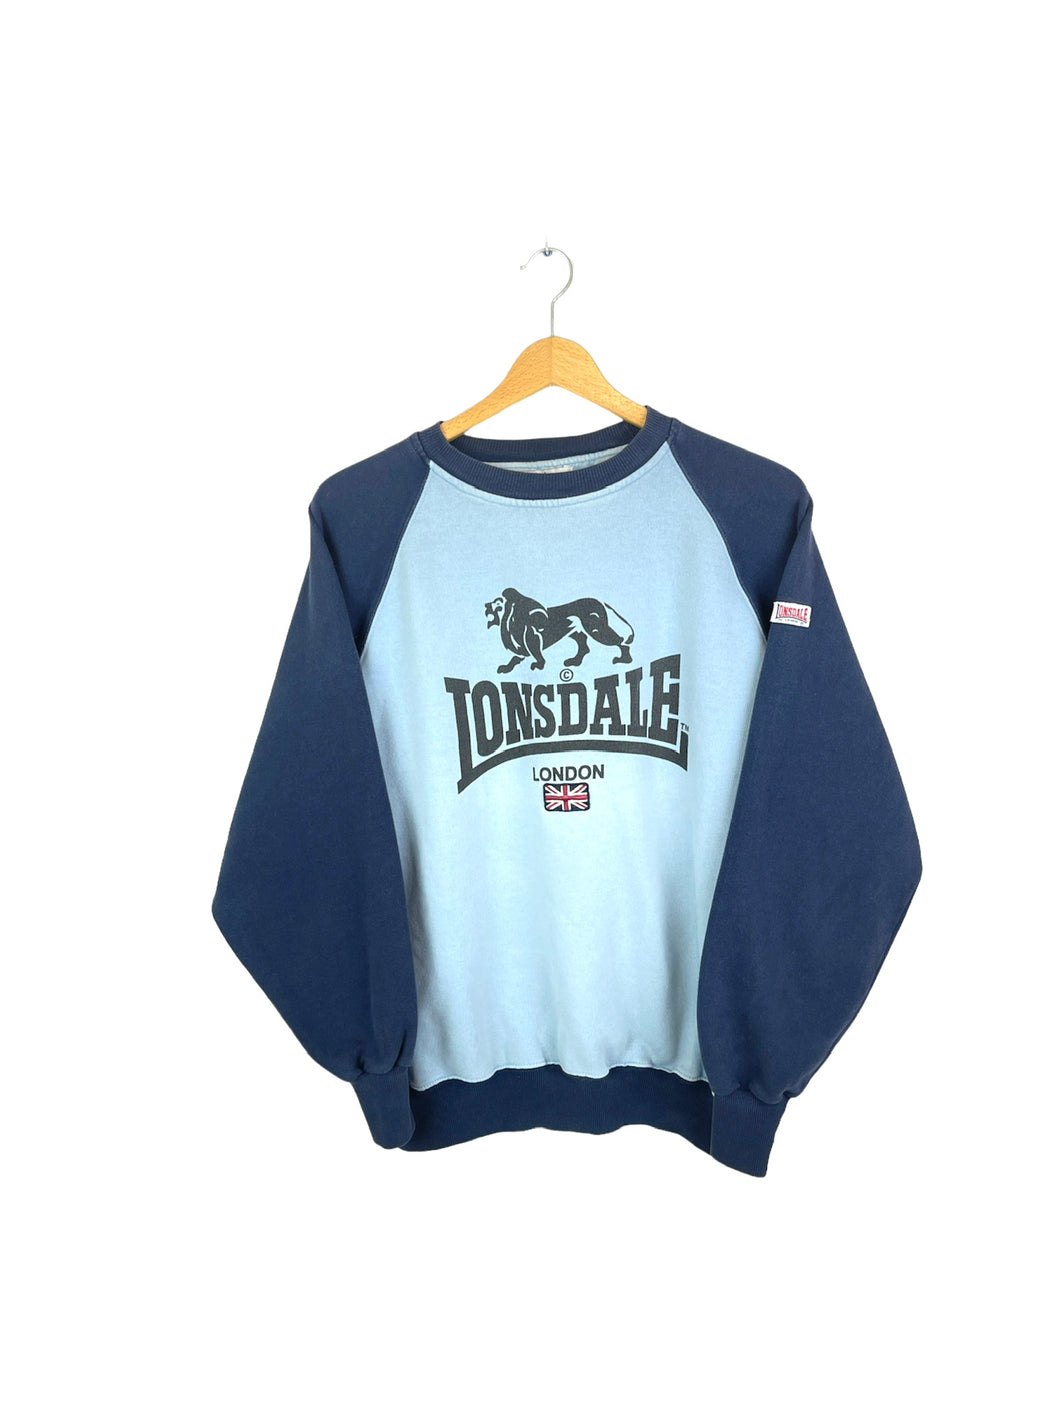 Lonsdale Sweatshirt - Large